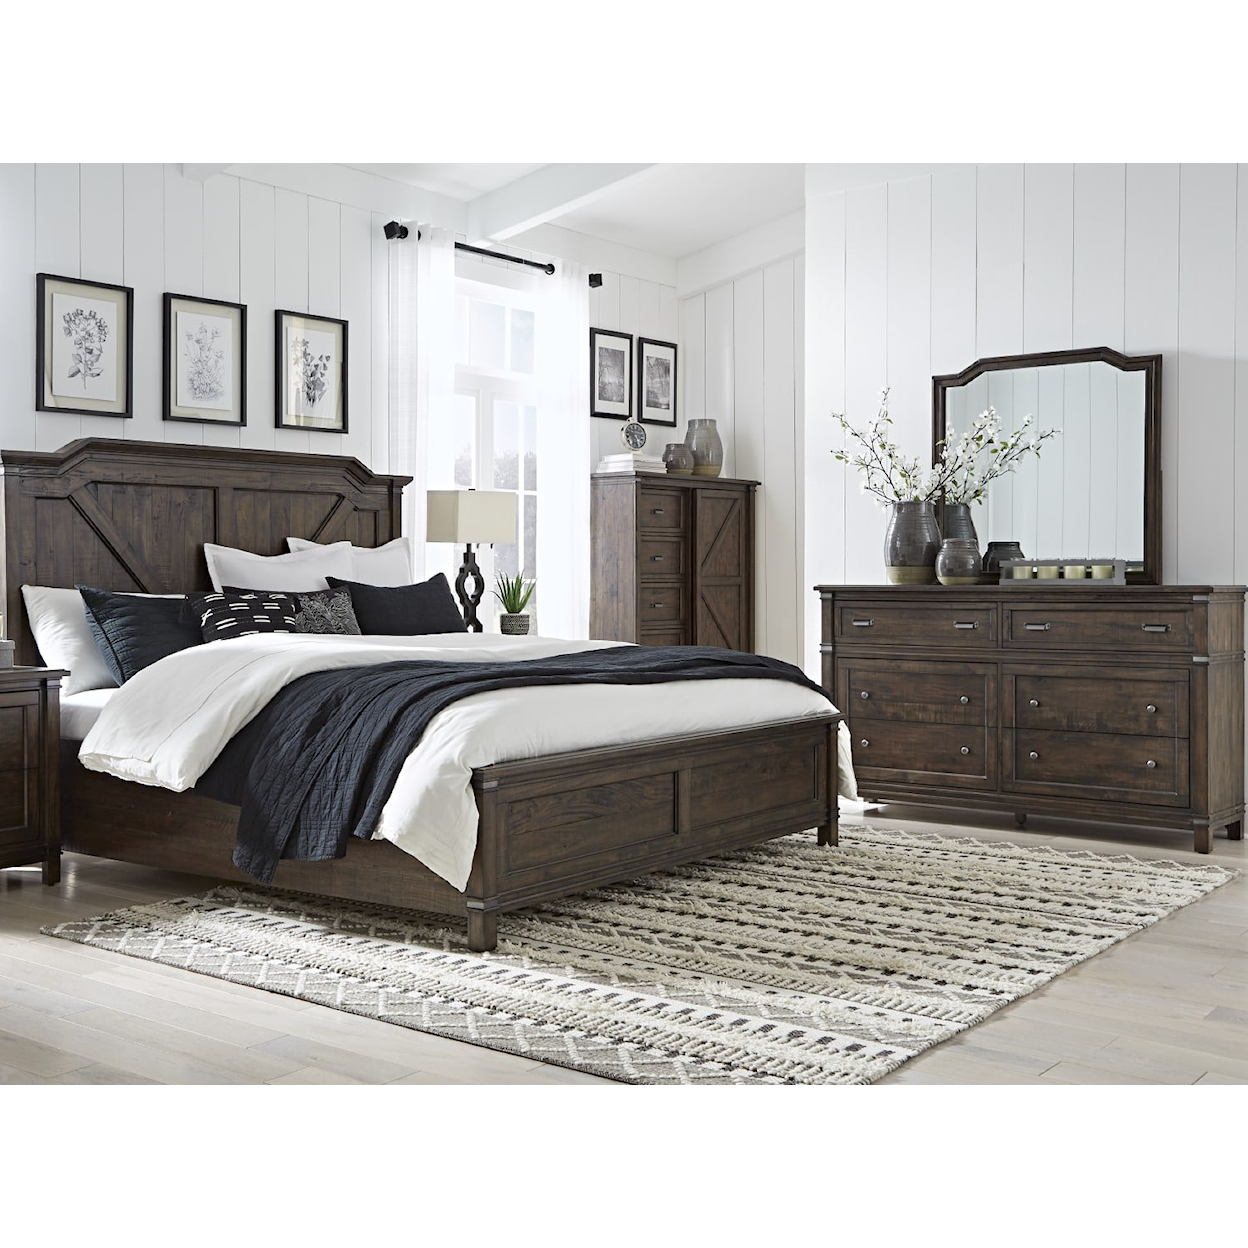 American Woodcrafters Farmwood Queen Bedroom Set